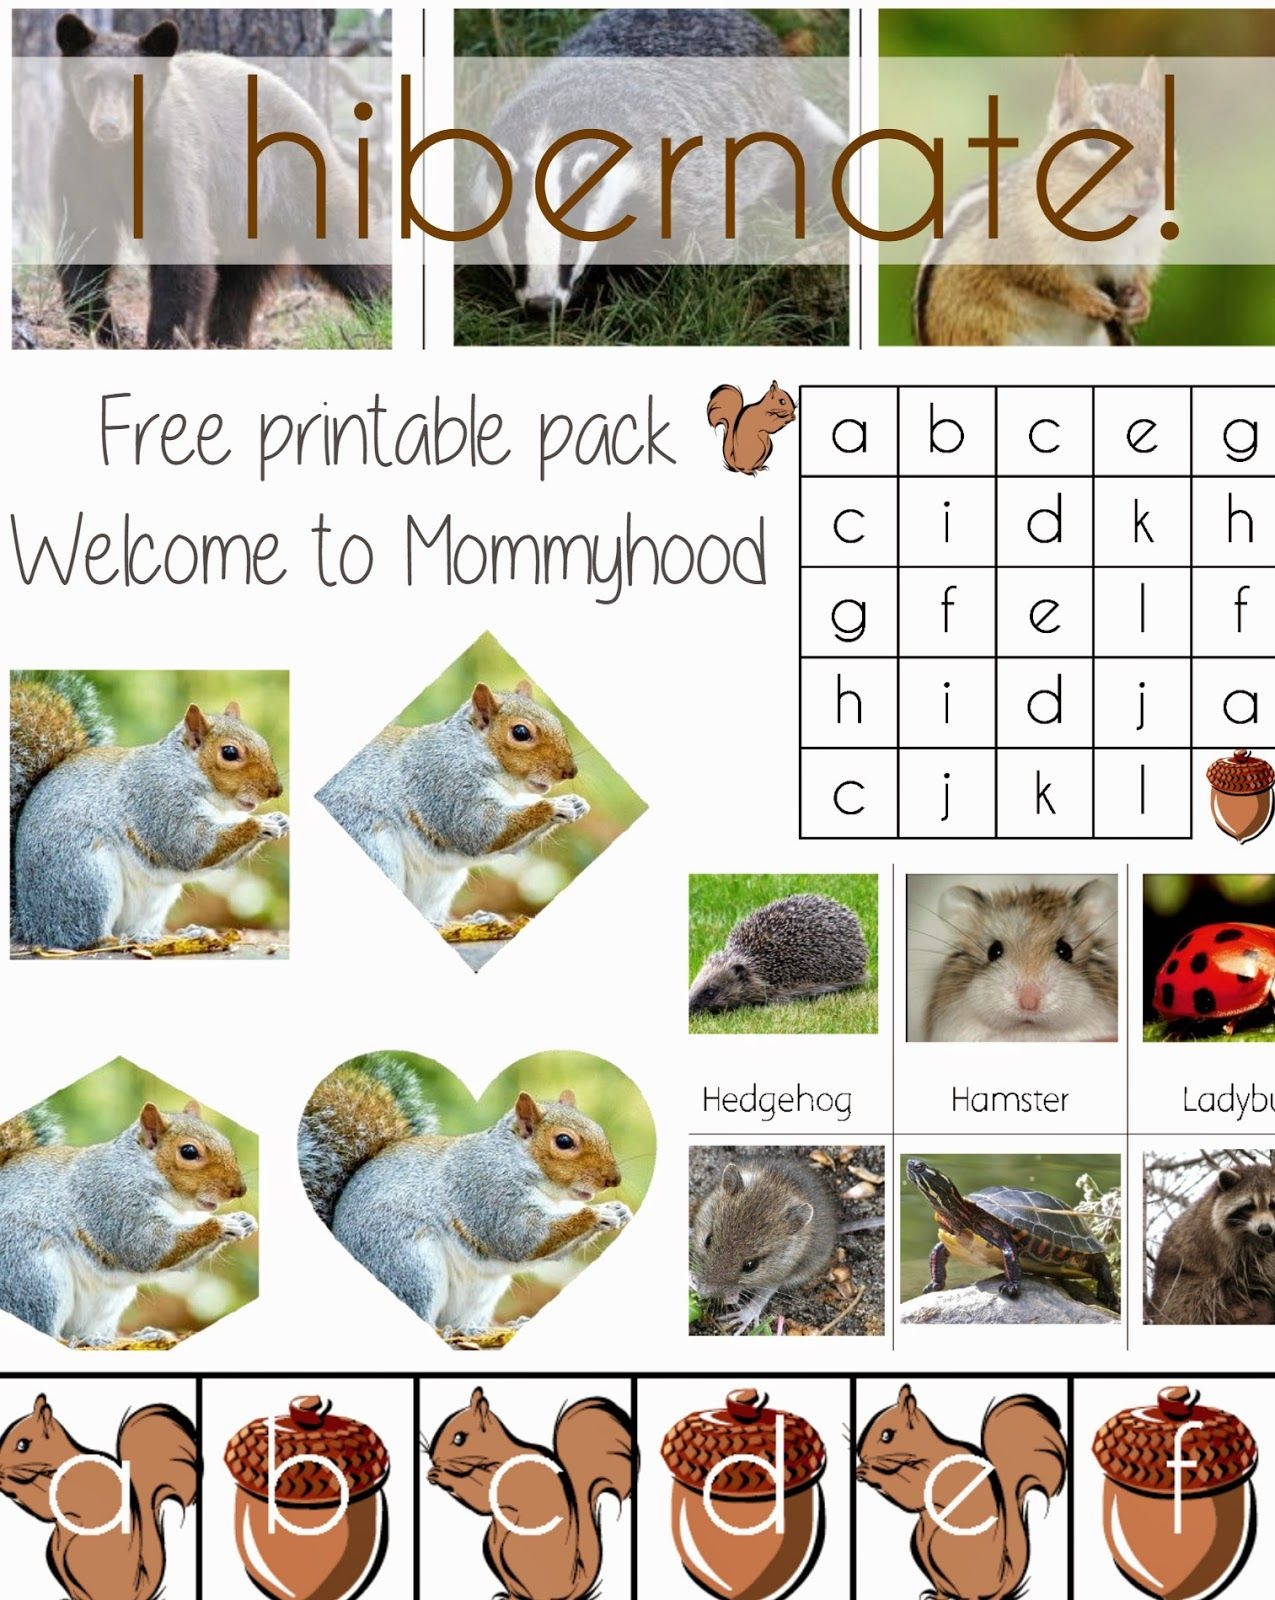 Science Activities For Preschoolers And Toddlers: Hibernation - Free Printable Hibernation Worksheets